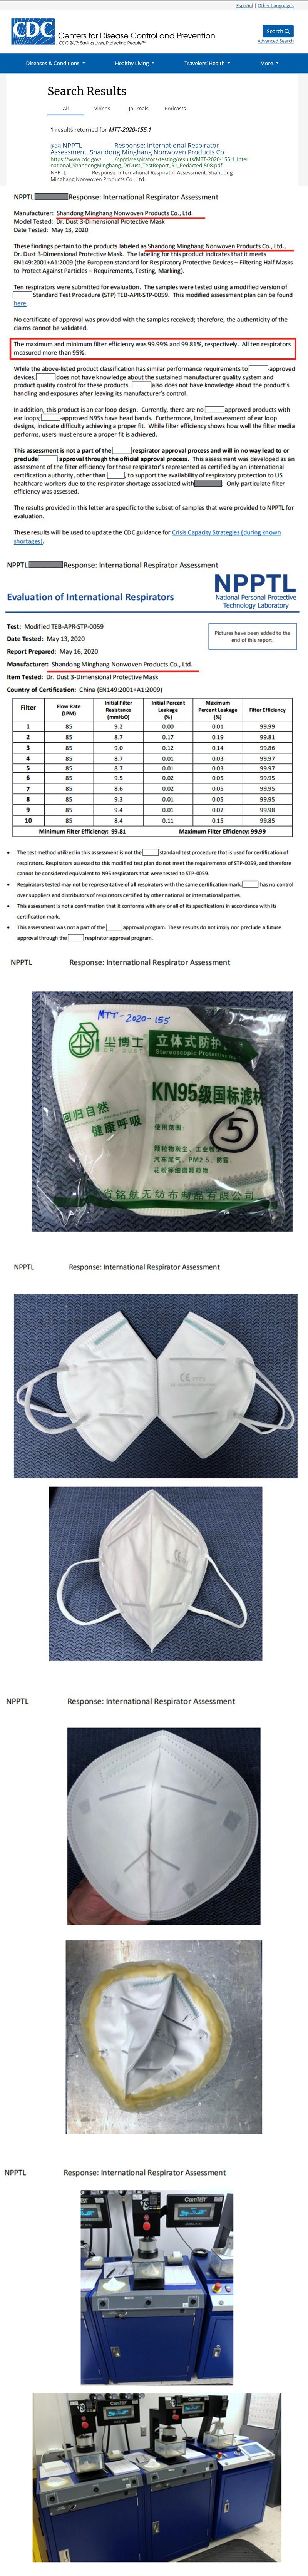 Face Mask Facial Shield Respirator KN95 GB2626-2006 Filter Mouth Mask